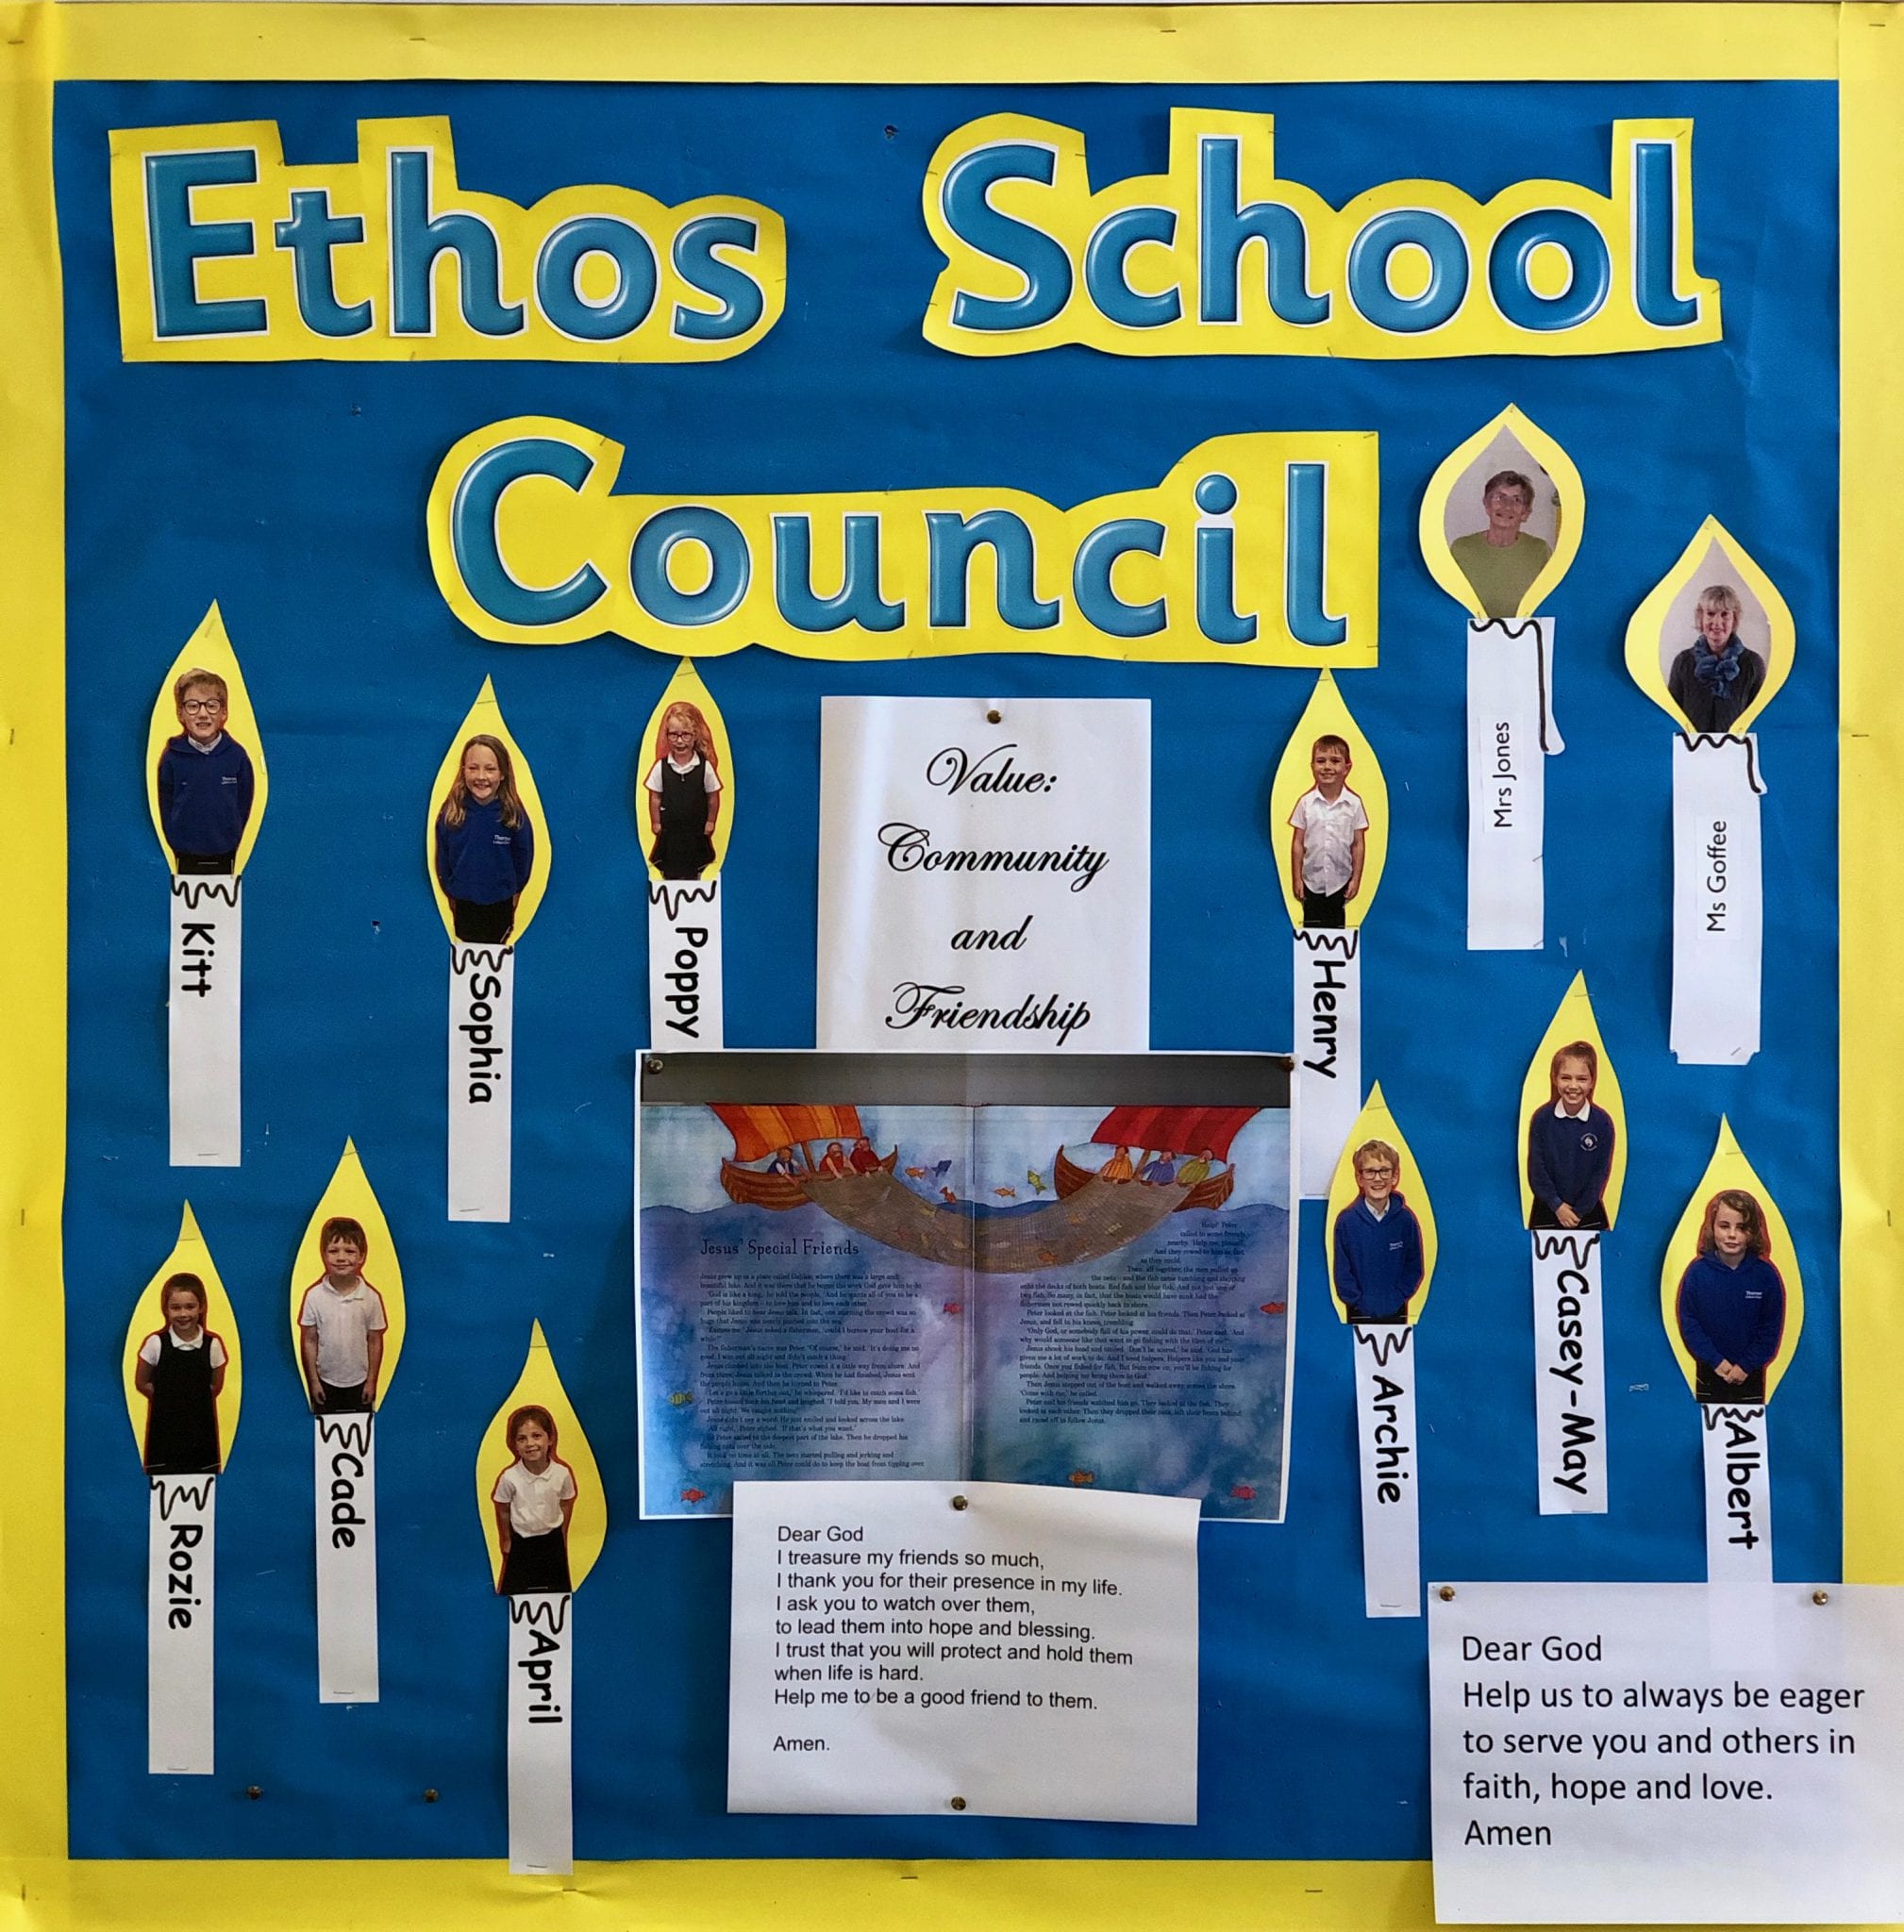 Ethos School Council Values